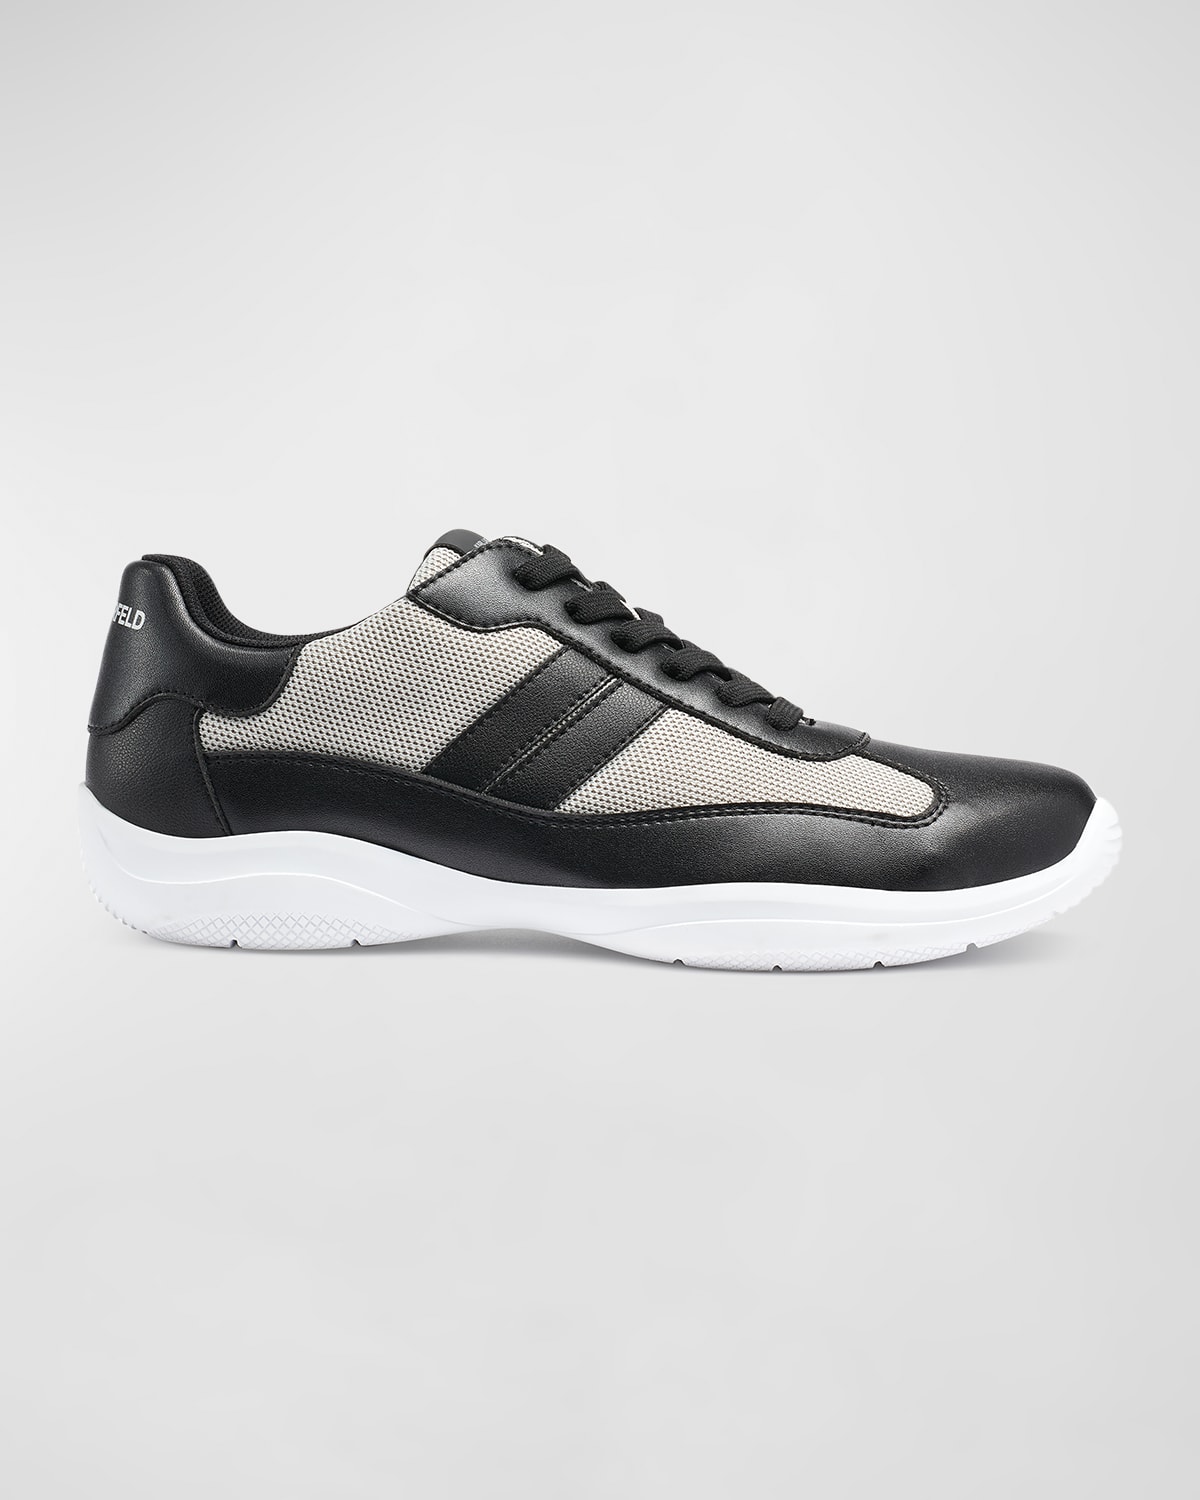 Karl Lagerfeld Men's Nylon Mesh & Leather Low-top Sneakers In Black/grey